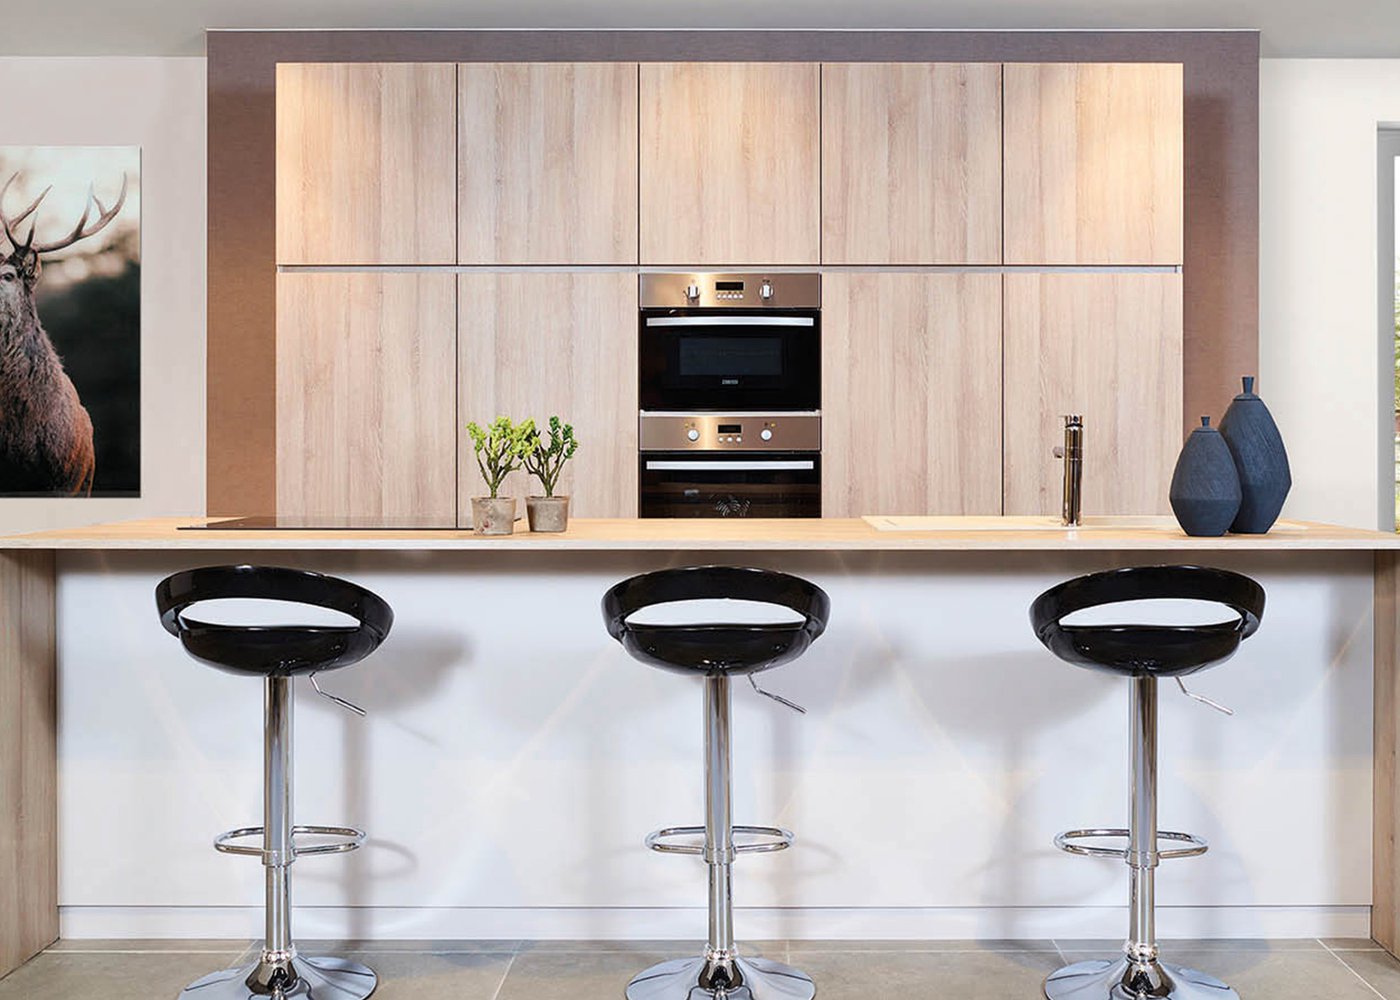 Moderne keuken in laminaat - Model Design